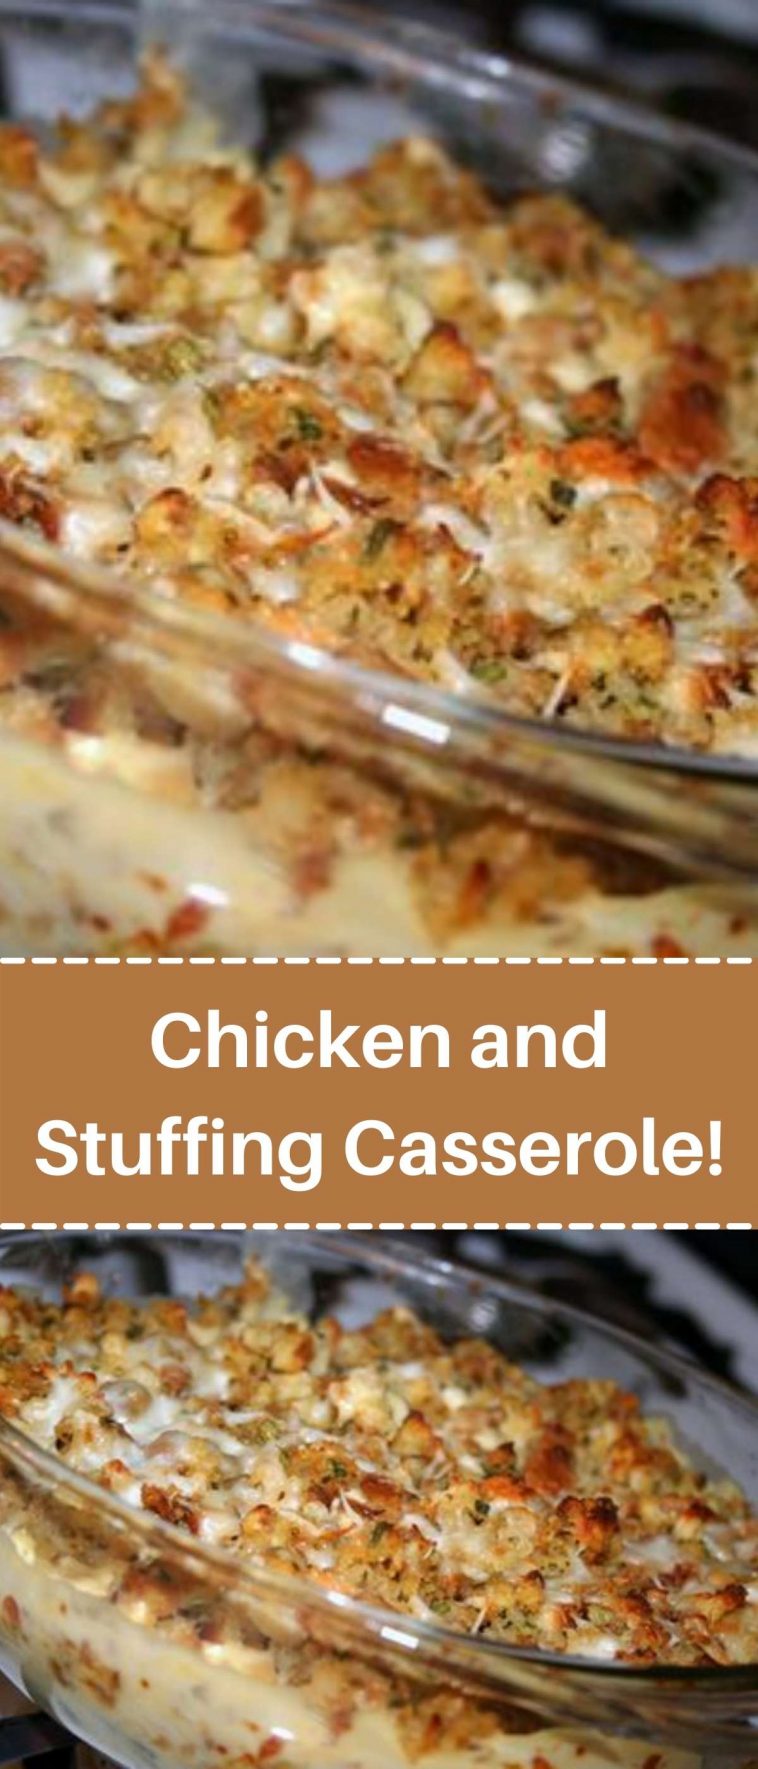 Chicken and Stuffing Casserole!